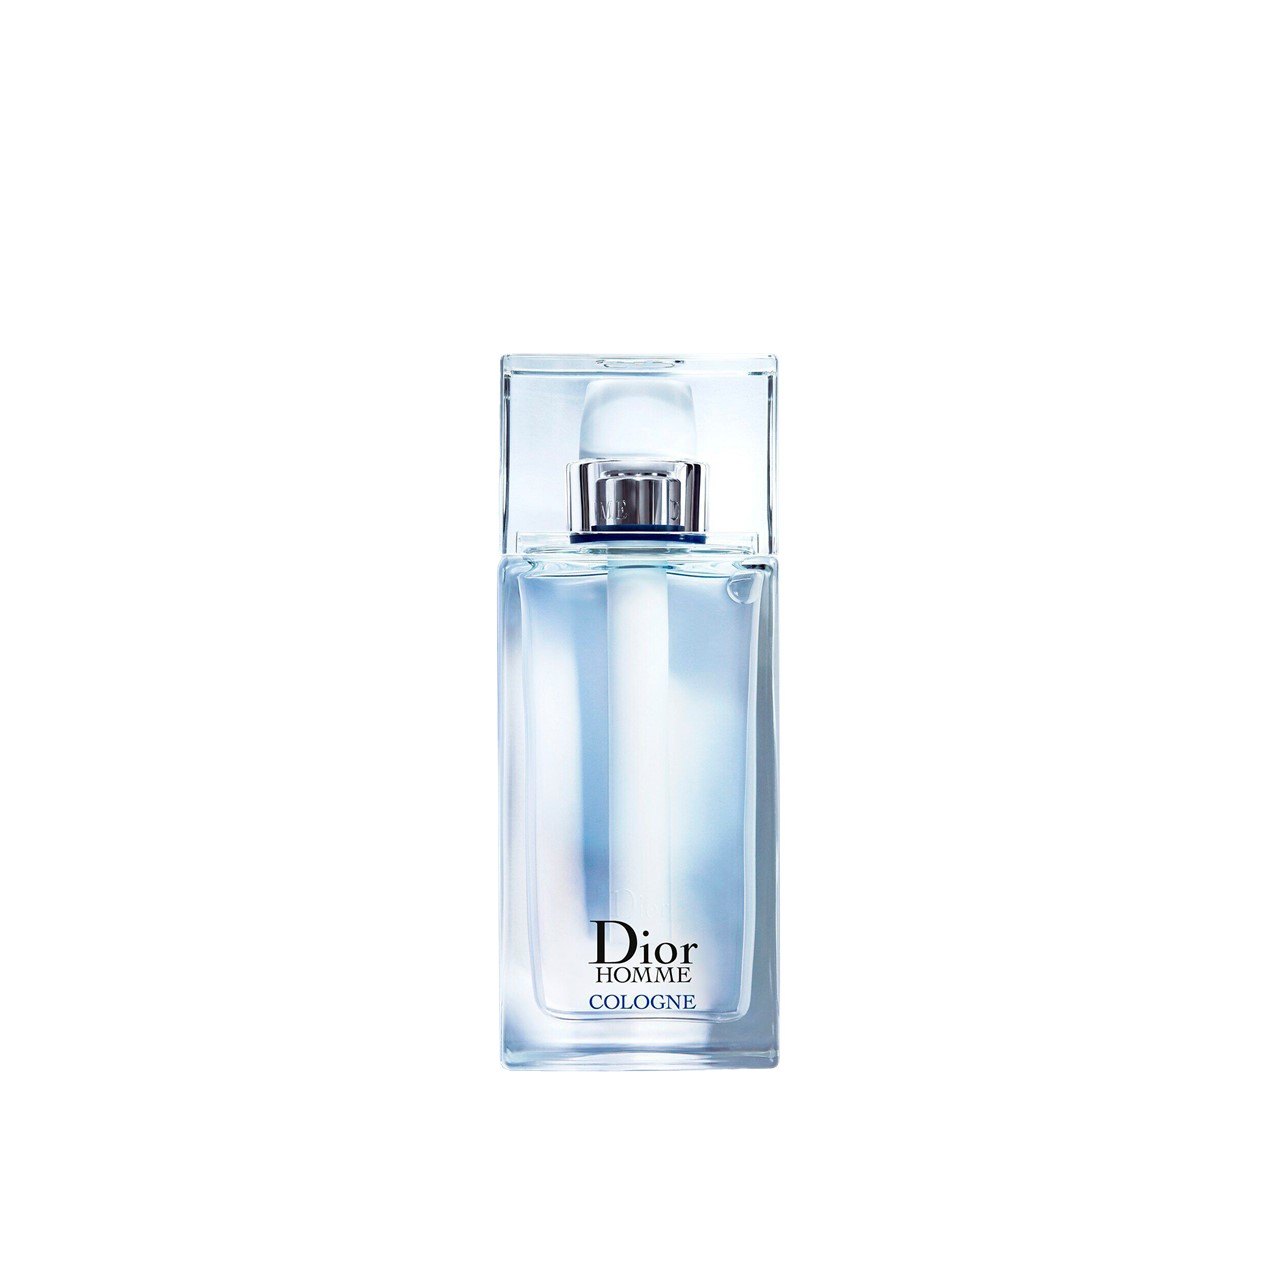 Dior Homme Cologne 75ml (2.54fl oz)